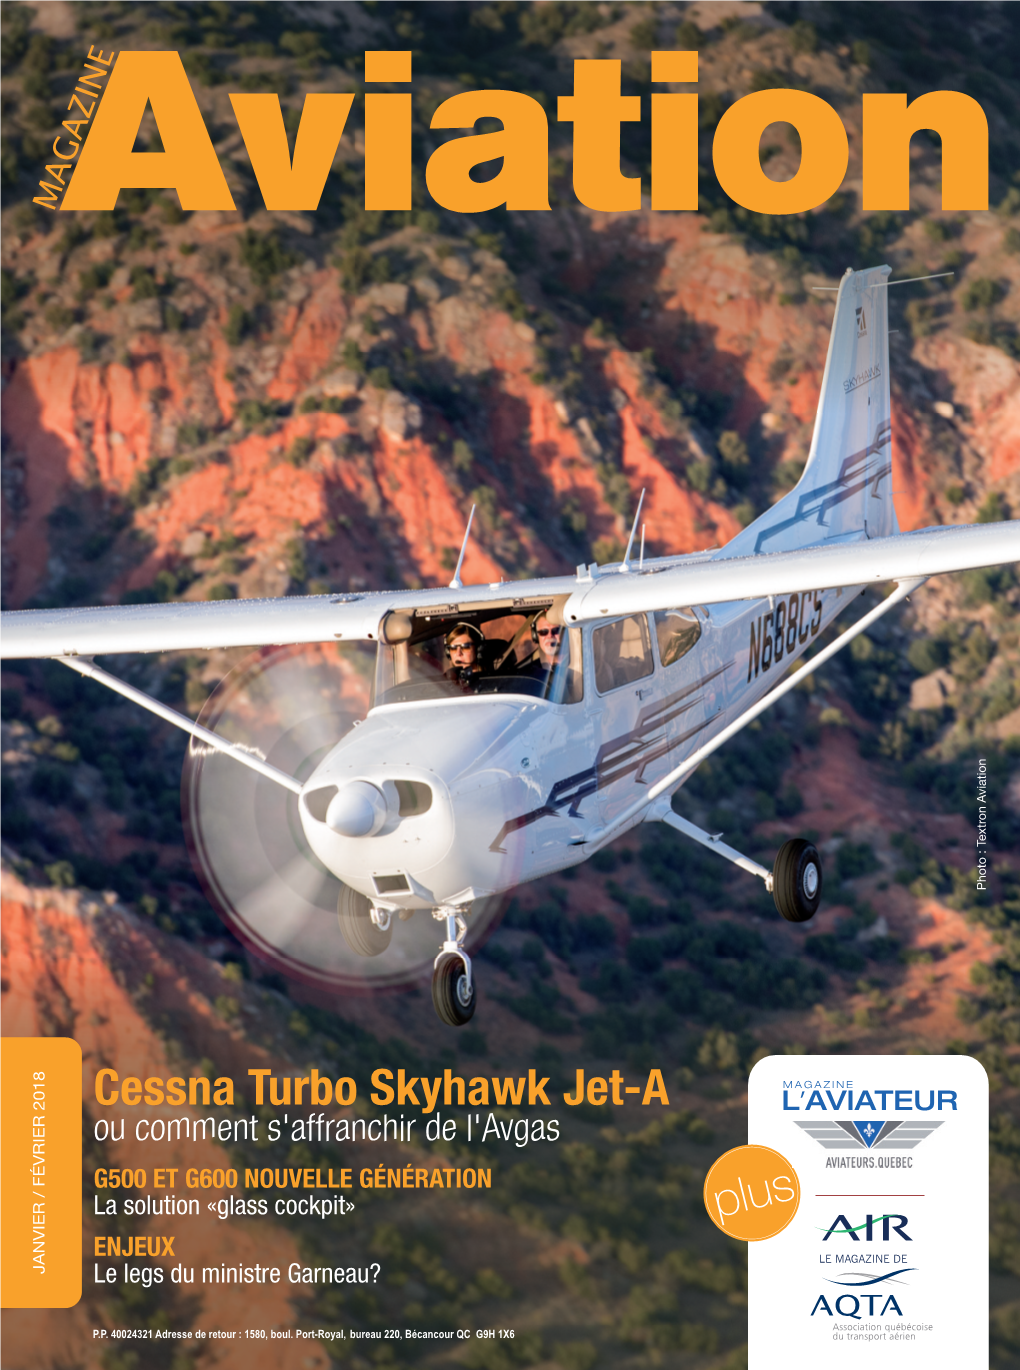 Cessna Turbo Skyhawk Jet-A